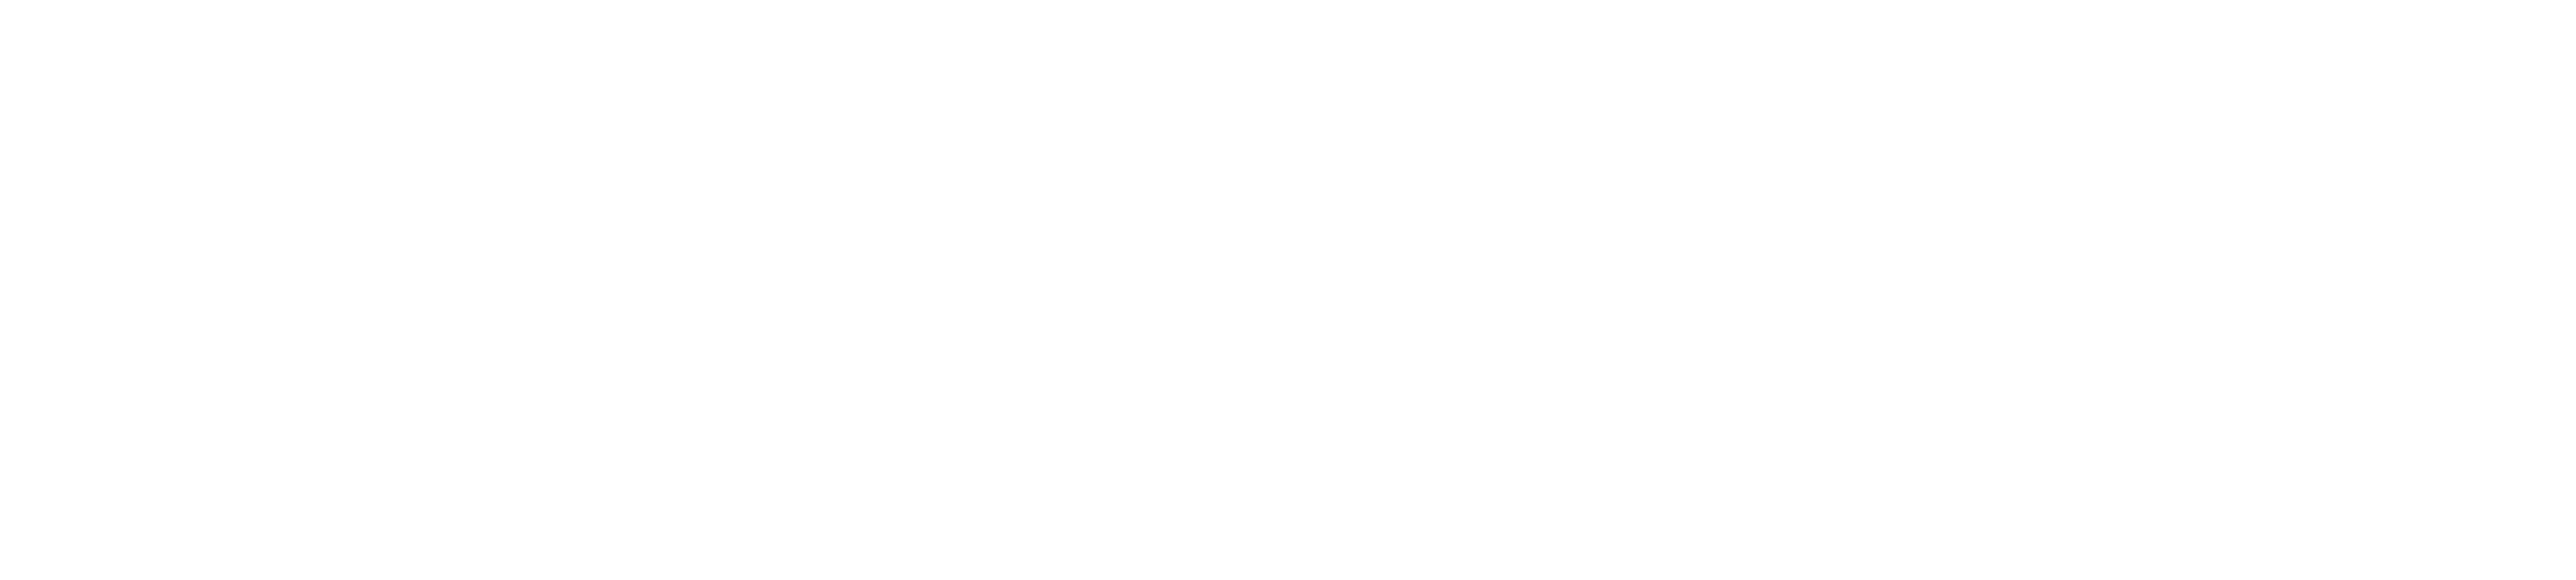 logo_white_booster-3